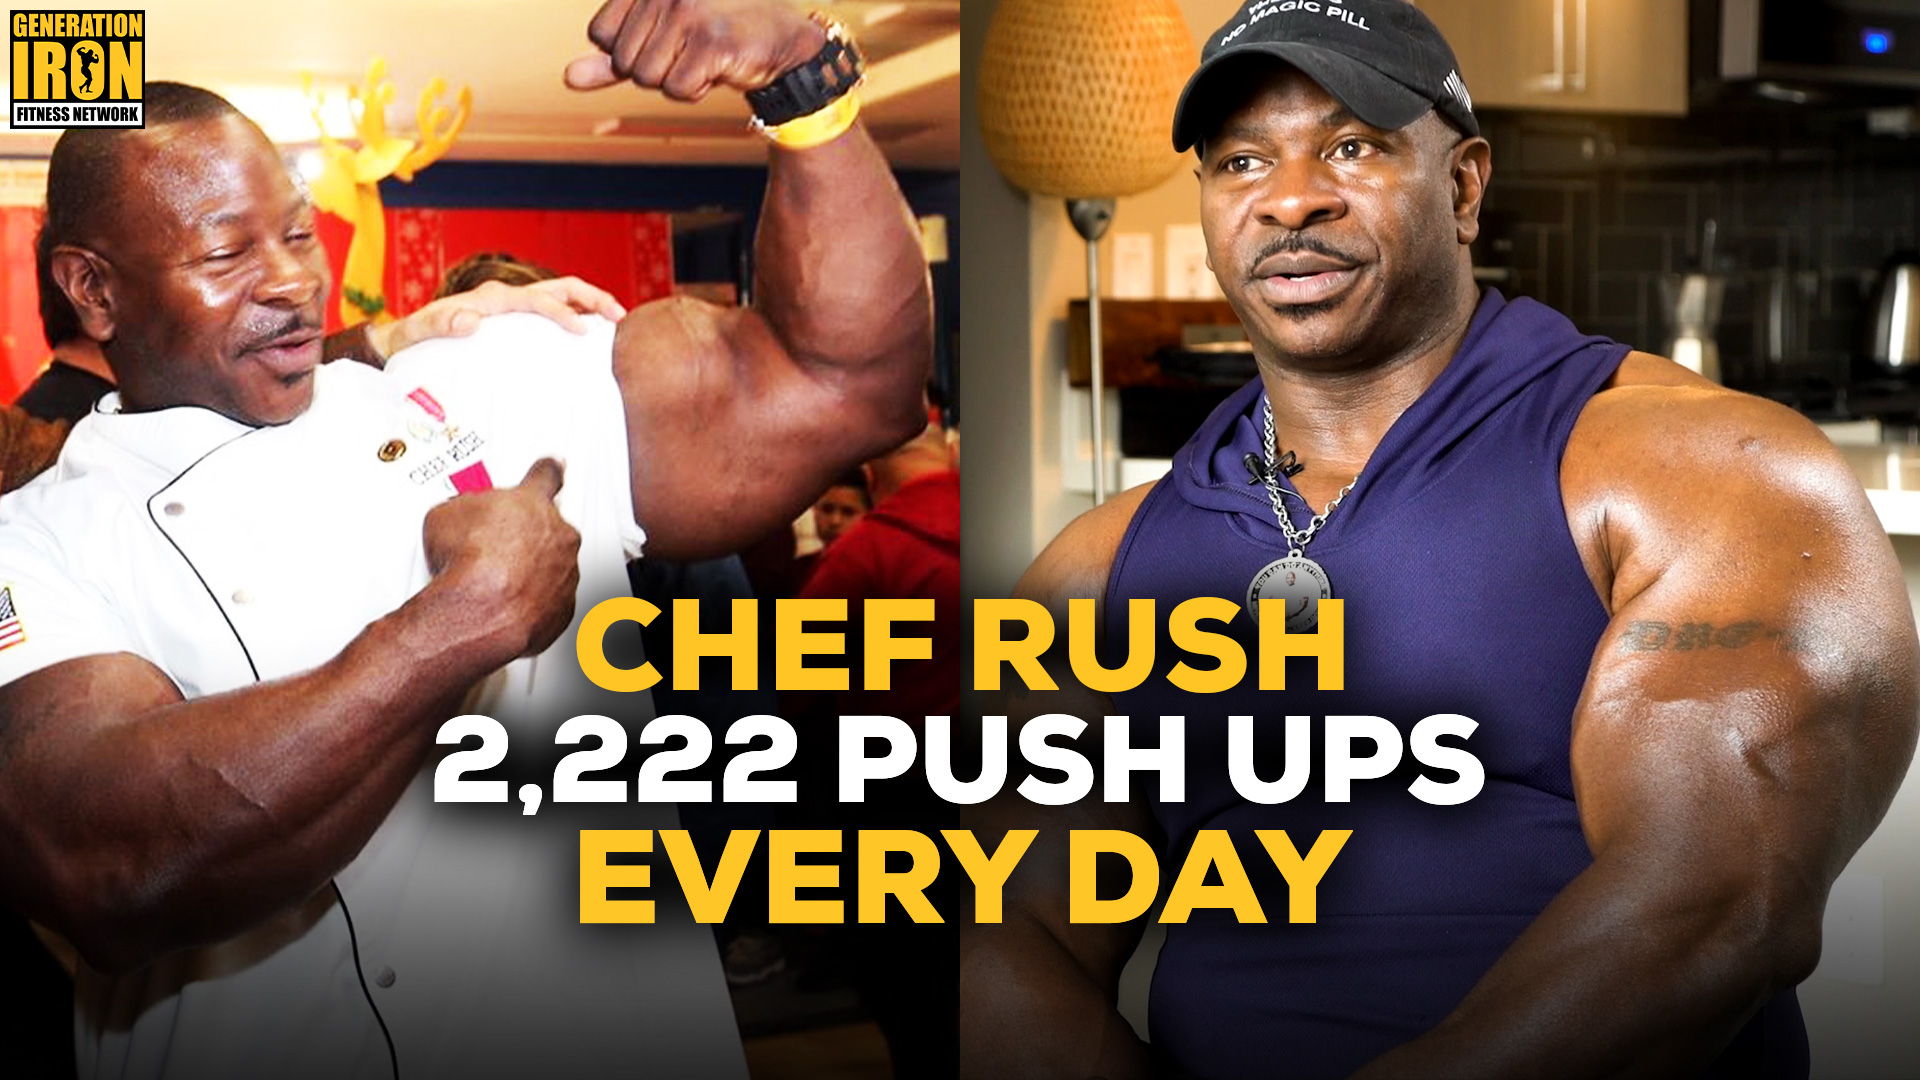 Chef-Rush-2222-Pushups-FB.jpg